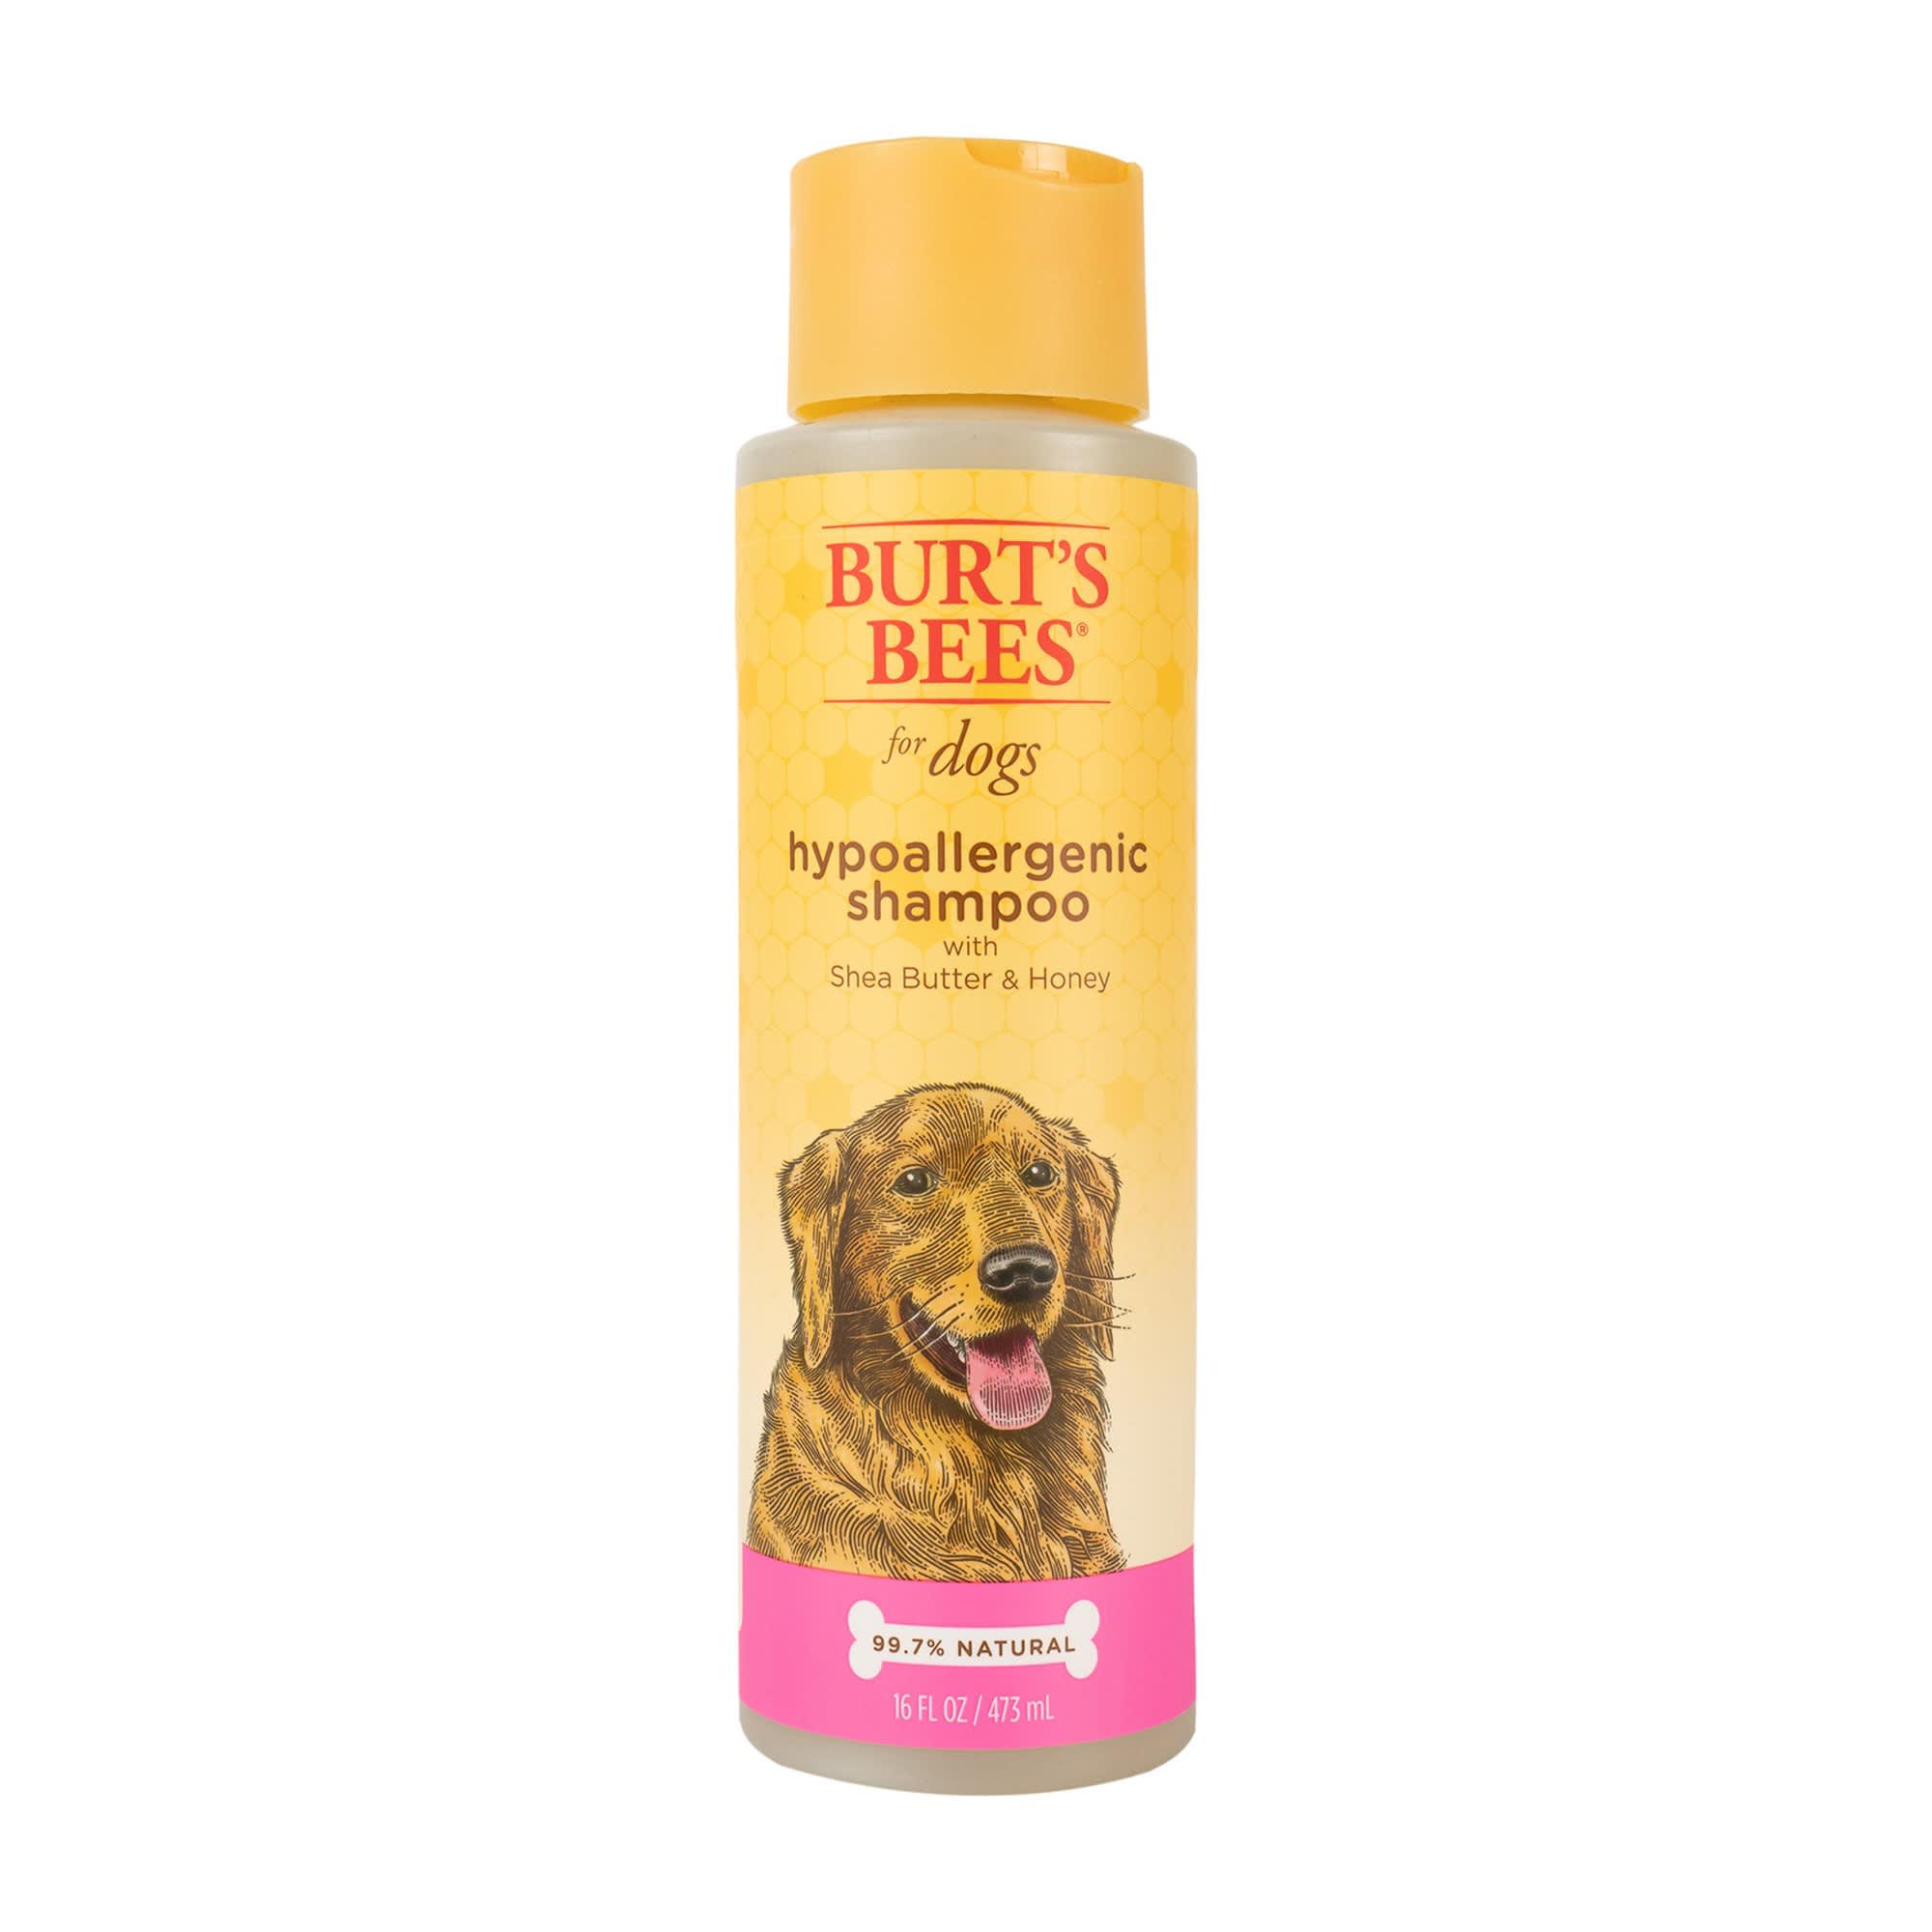 hypoallergenic dog shampoo